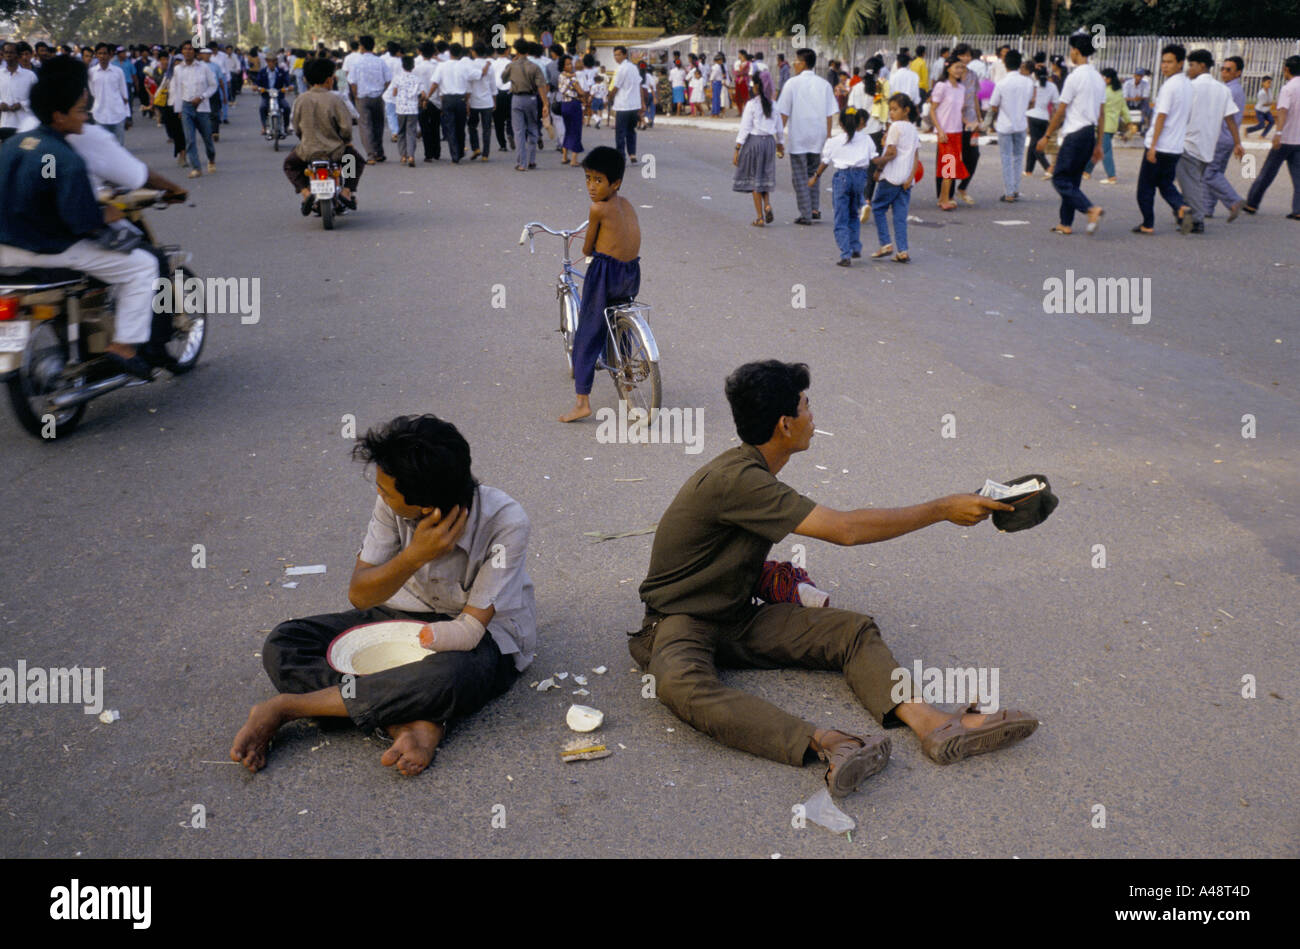 Phnom penh street scence with street beggars Stock Photo